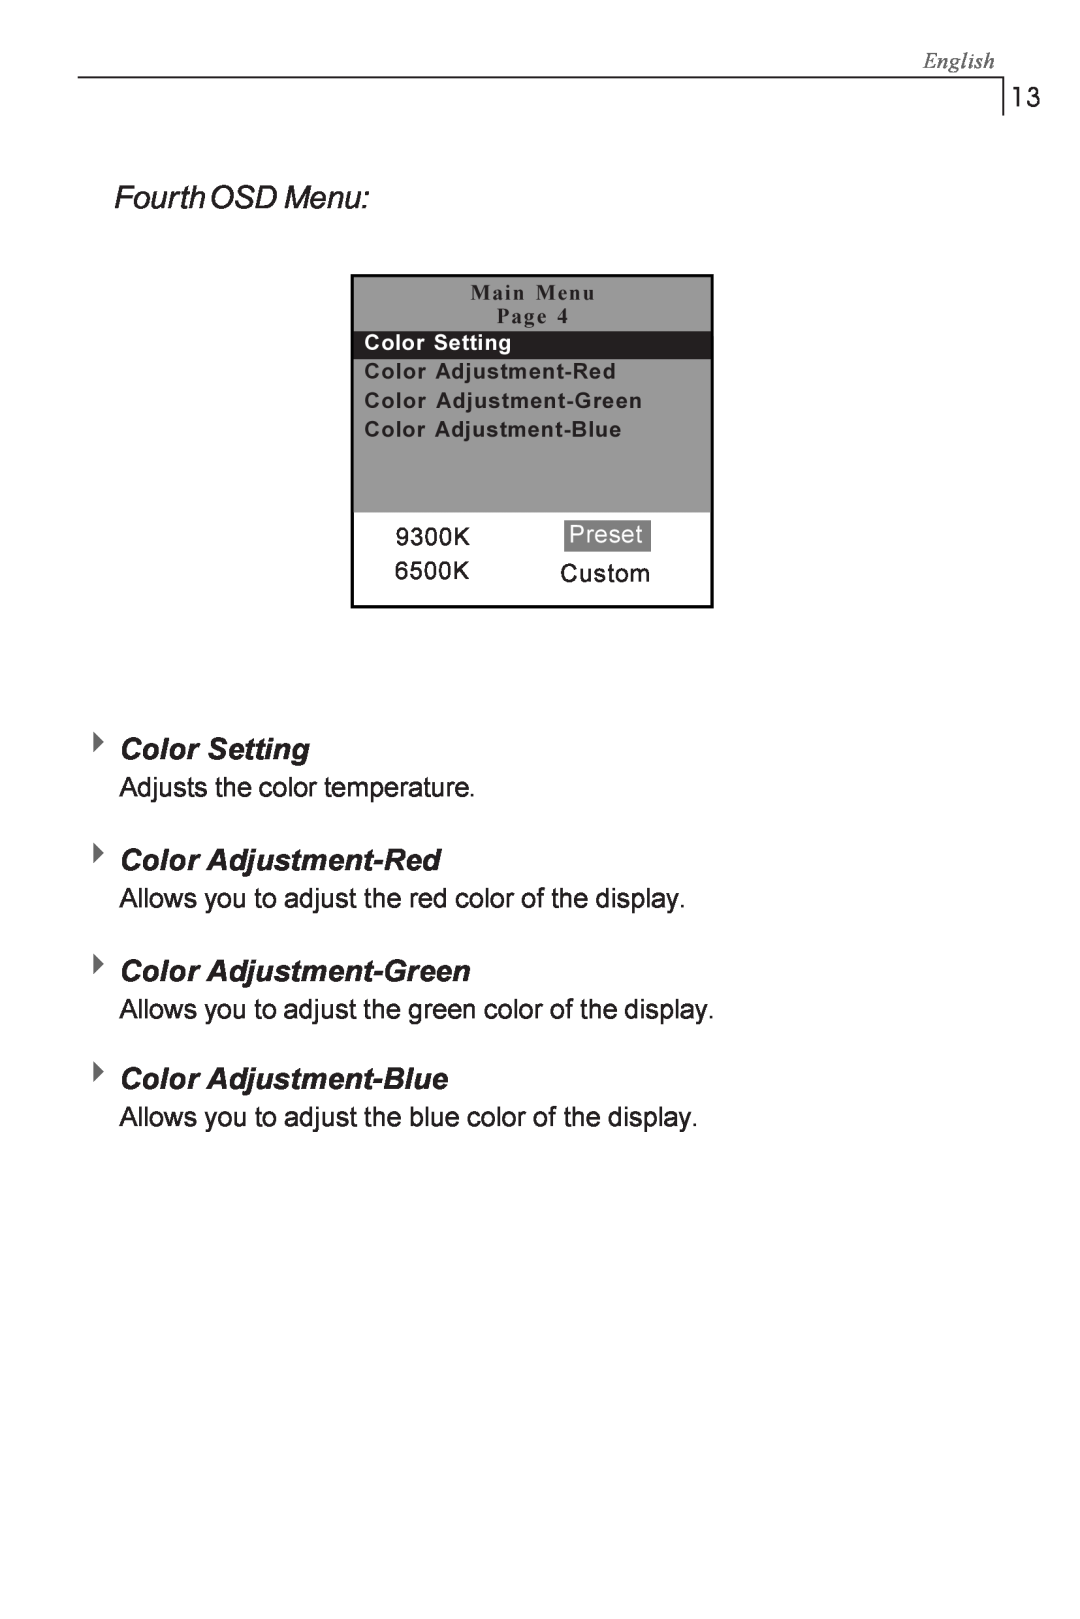 Planar PX1710M manual Fourth OSD Menu, 9300K, Preset, 6500K, Custom, English, Main Menu Page, Color Setting 